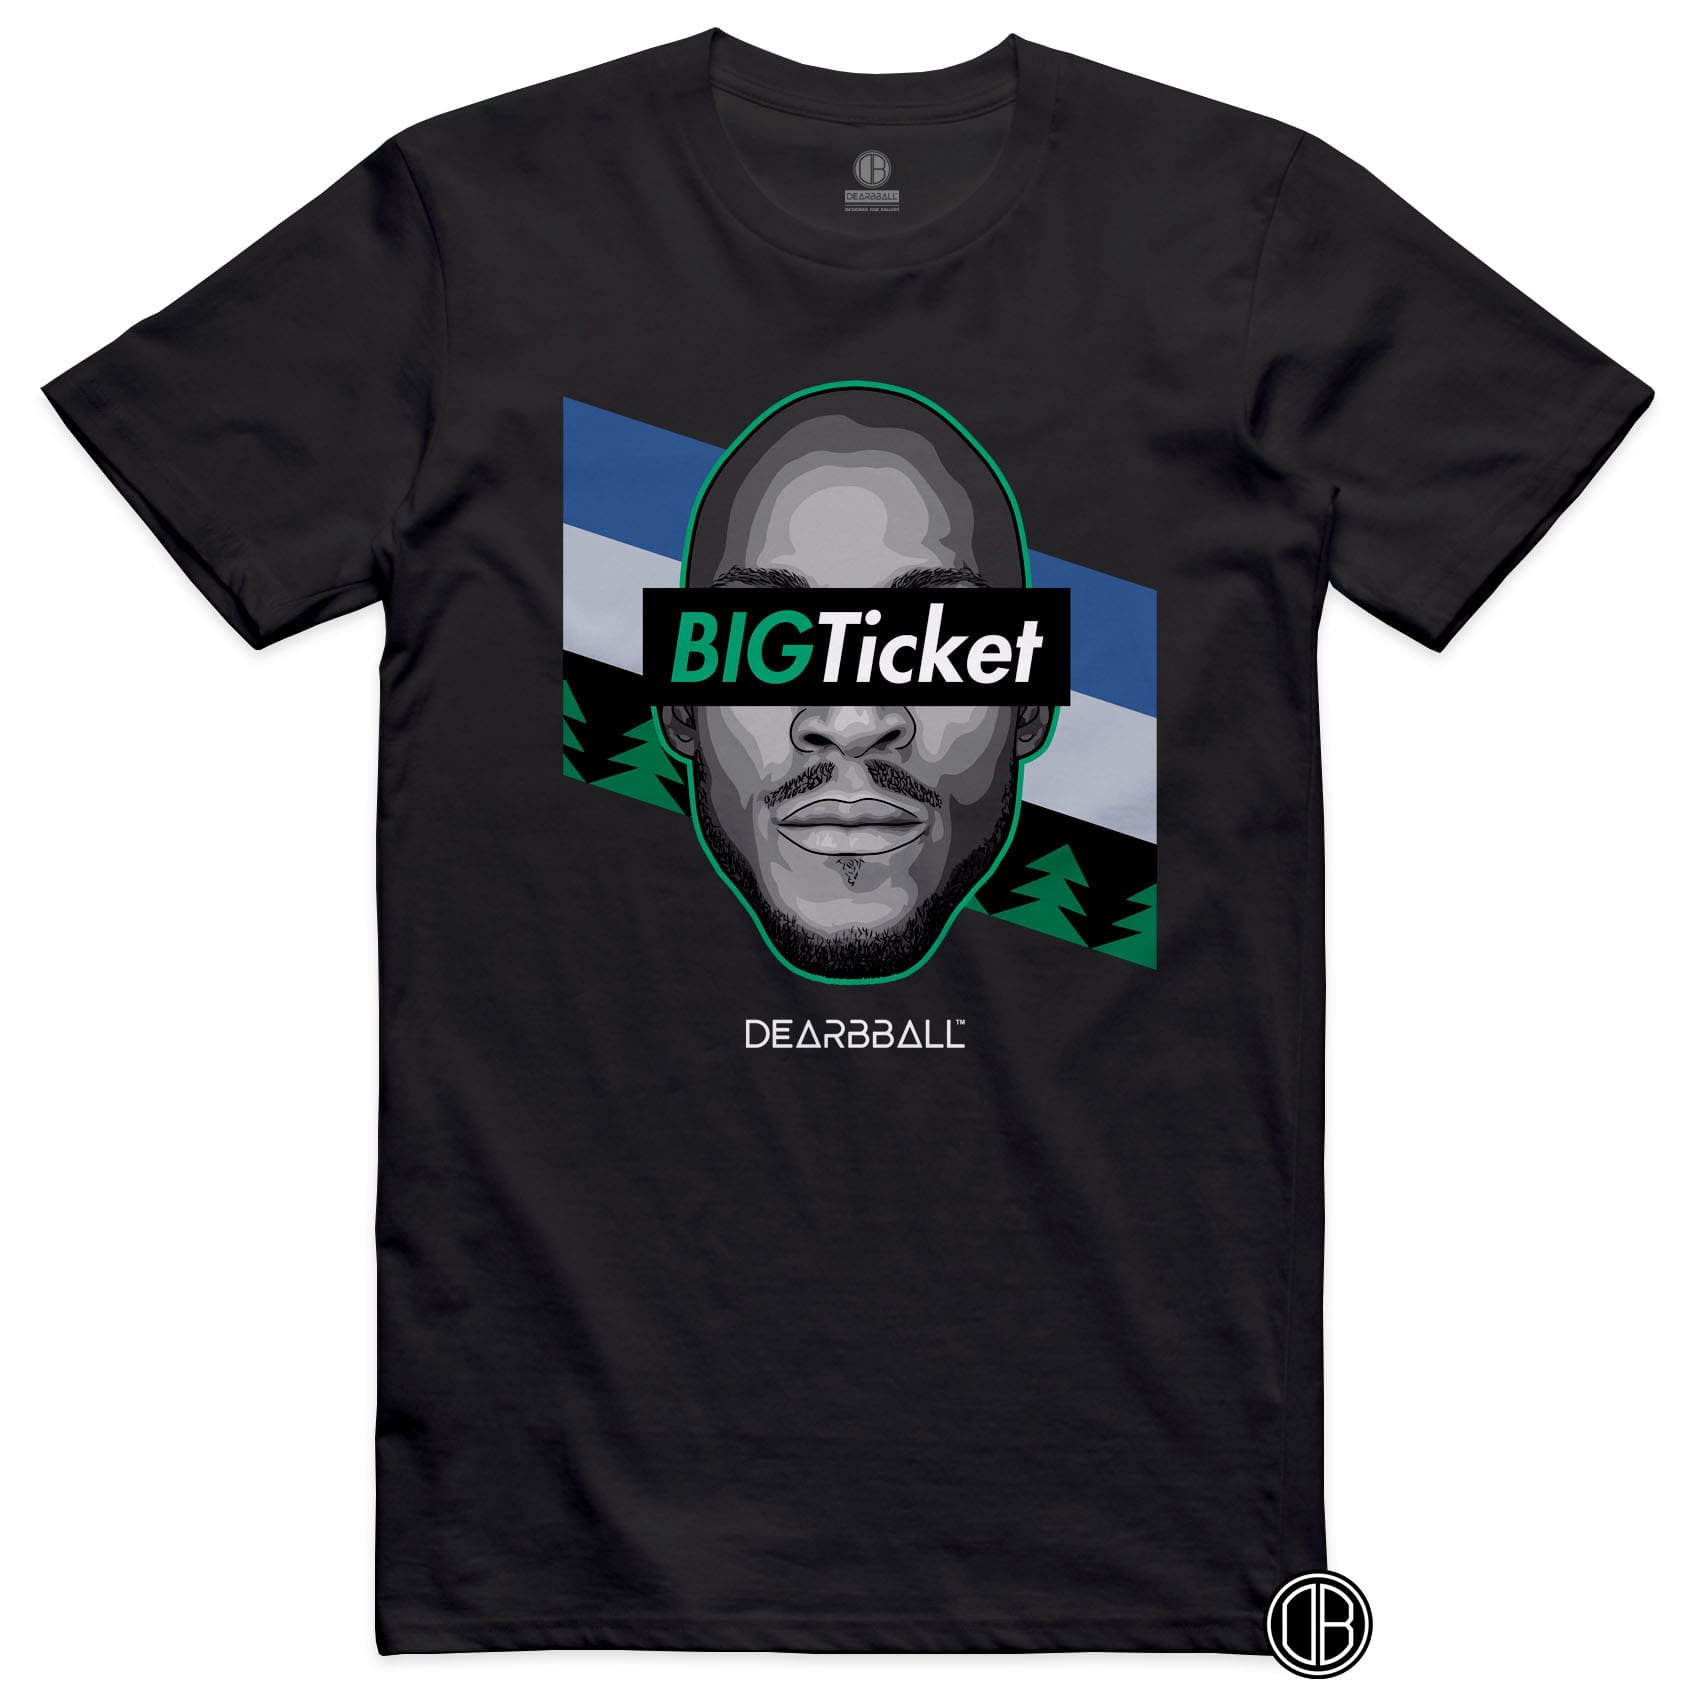 DearBBall Premium T-Shirt - BIGTicket Minnesota Trashtalk Edition